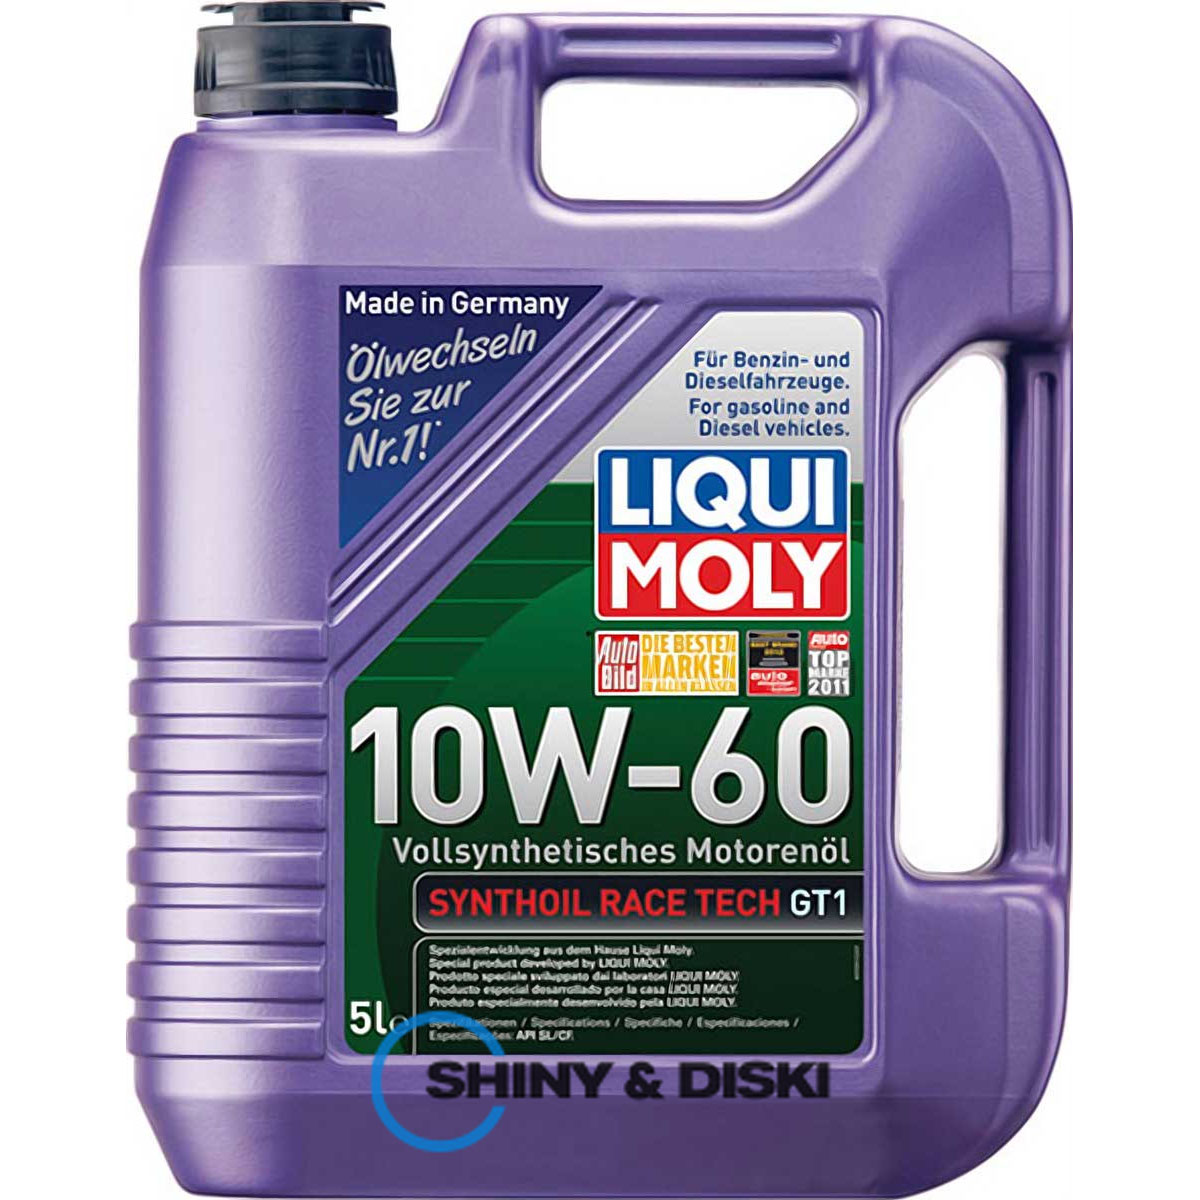 liqui moly synthoil race tech gt1 10w-60 (5л)